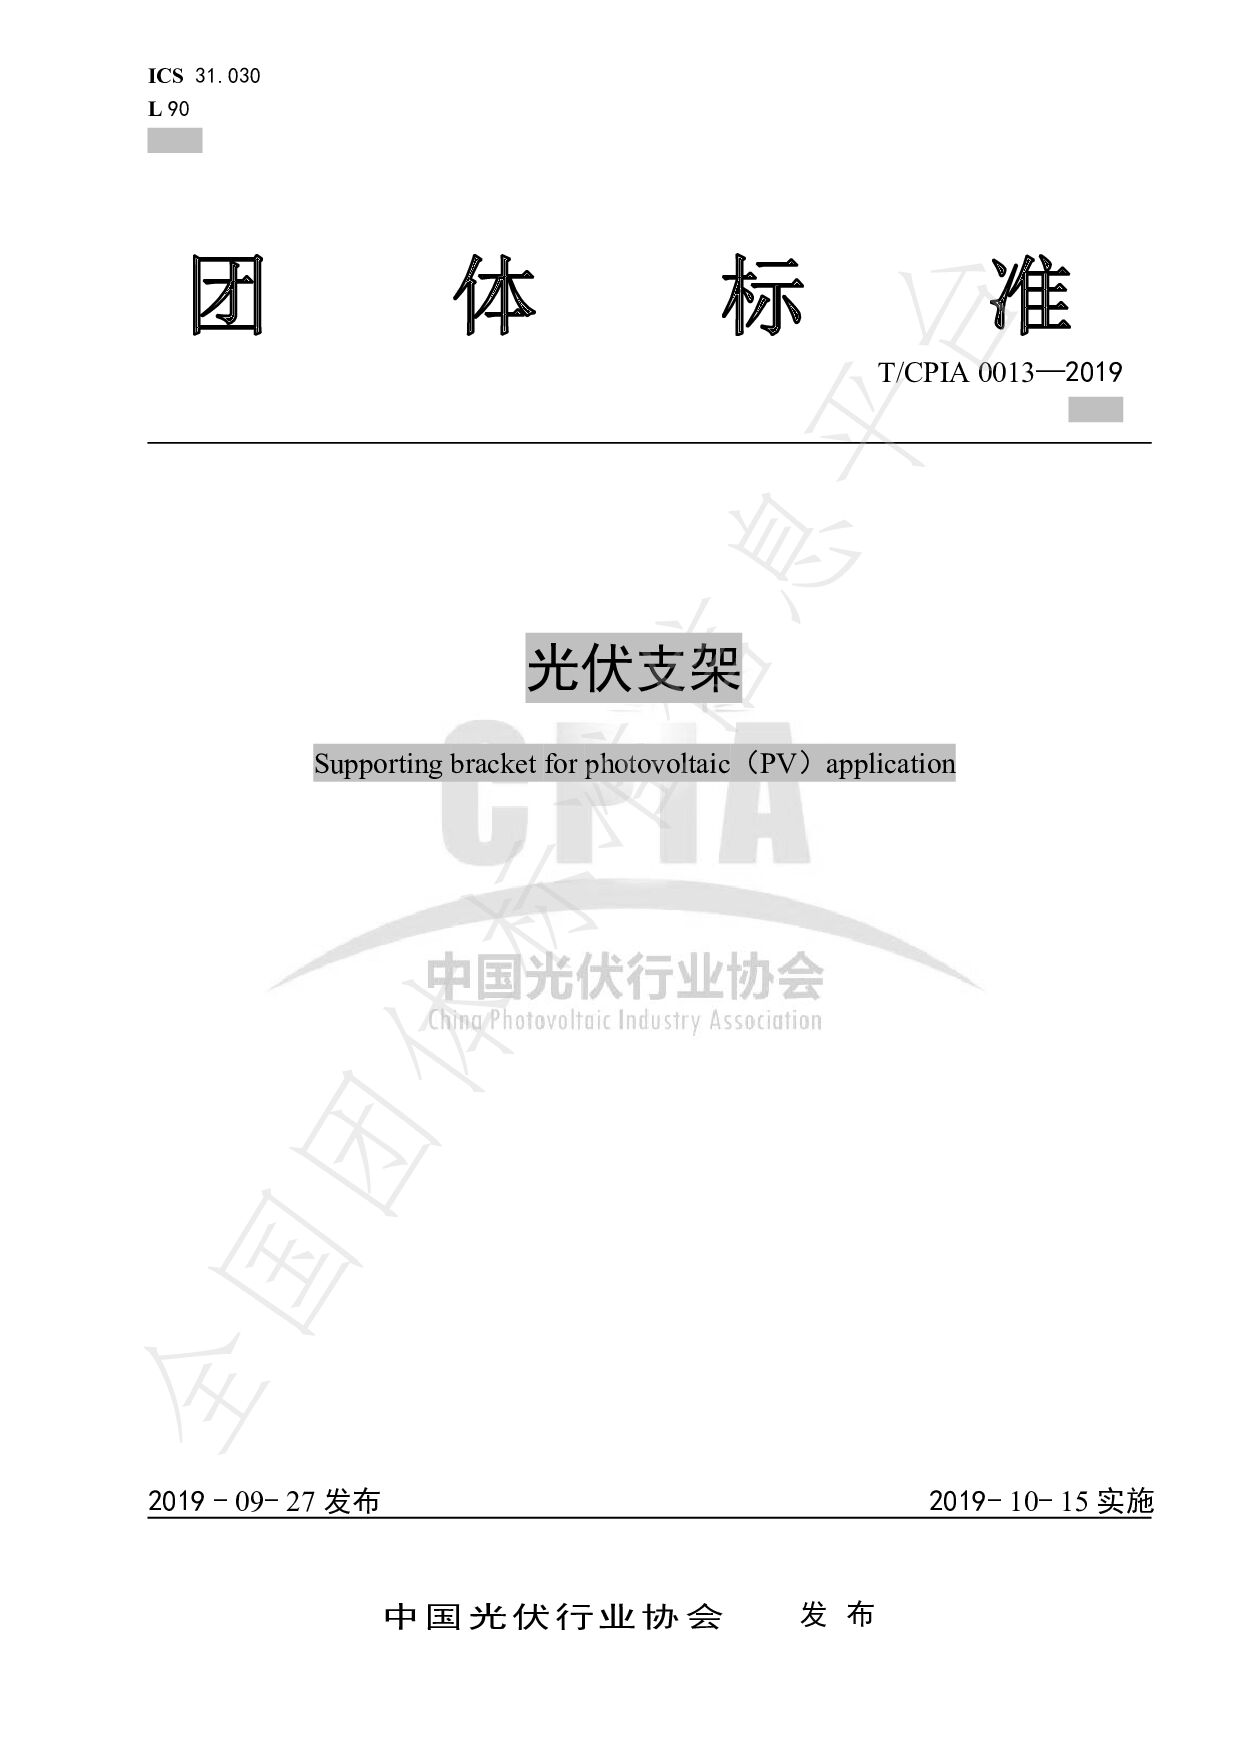 T/CPIA 0013-2019封面图